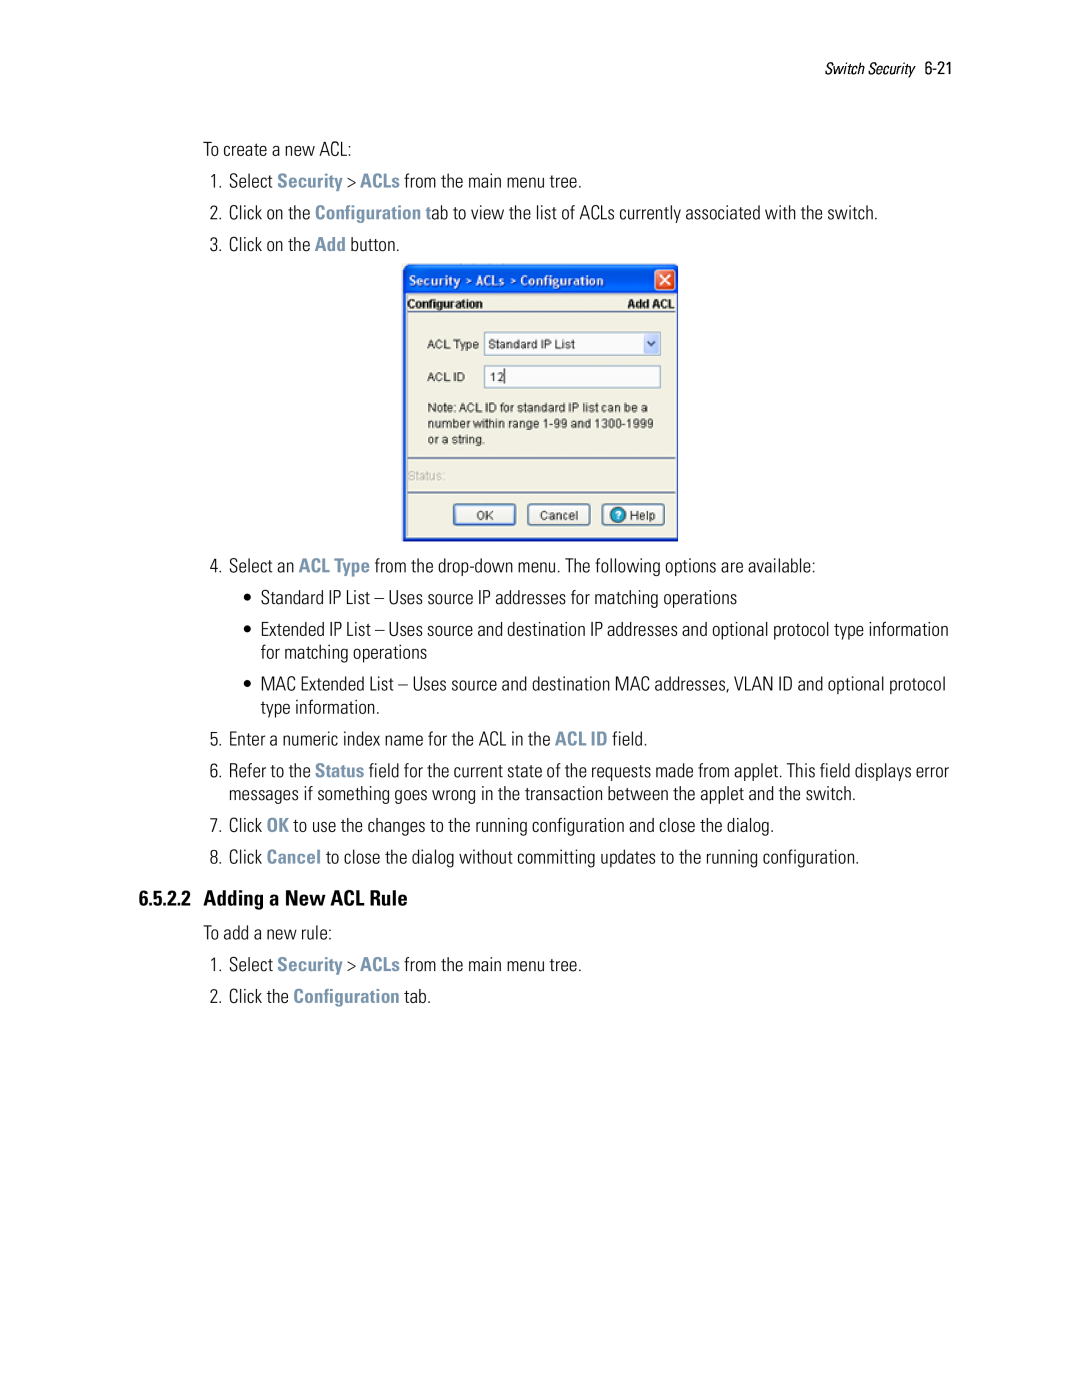 Motorola WS5100 manual 6.5.2.2Adding a New ACL Rule 